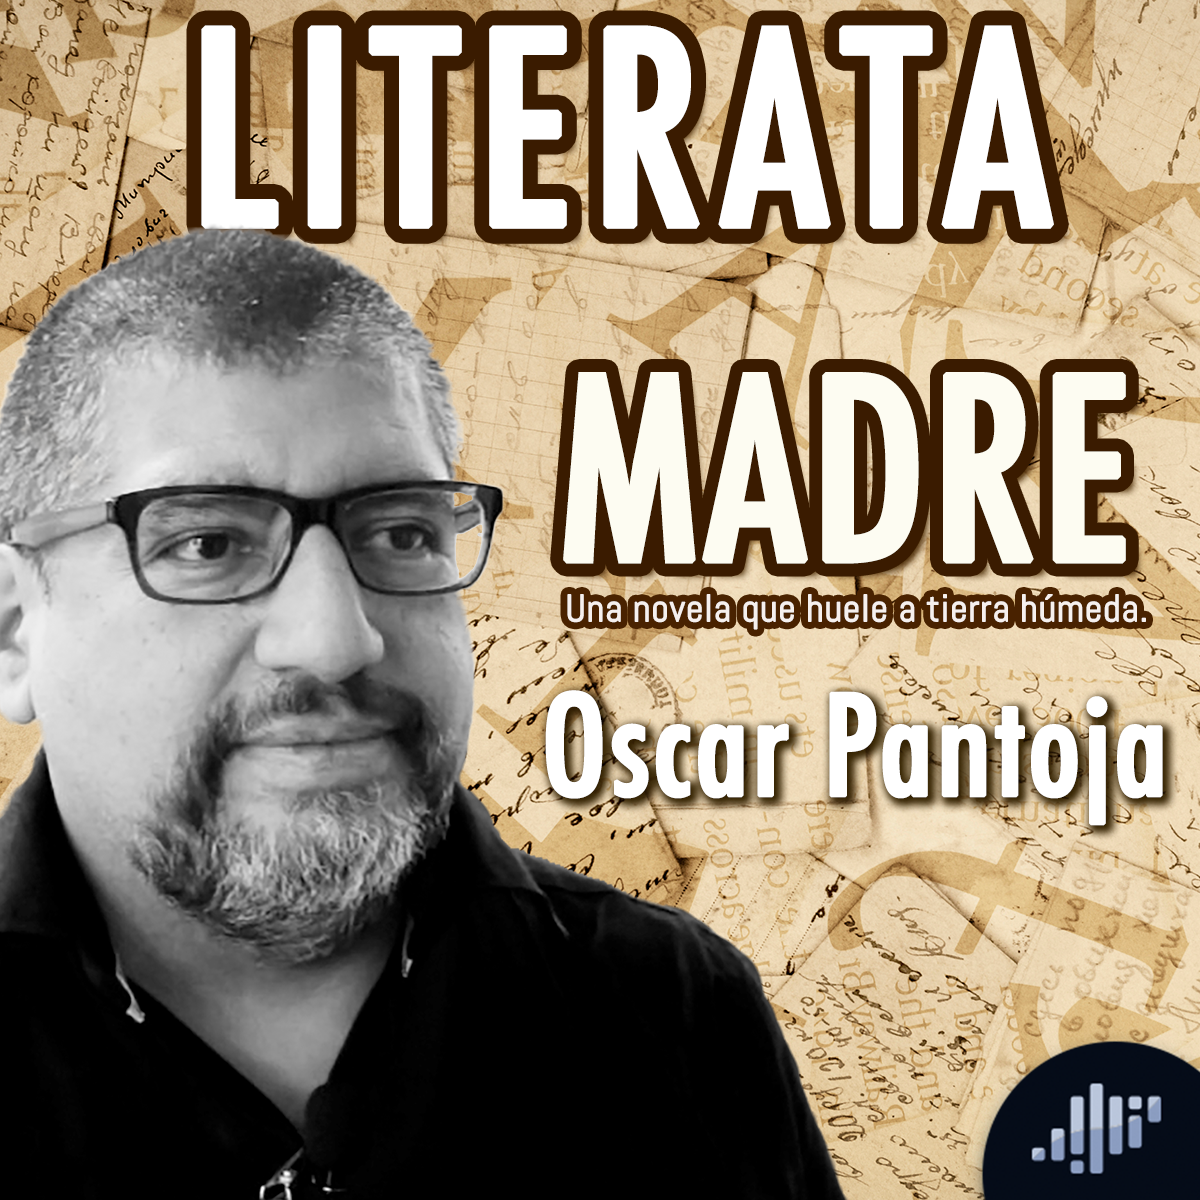 ‘Madre’, de Oscar Pantoja, una novela que huele a tierra húmeda | Literata